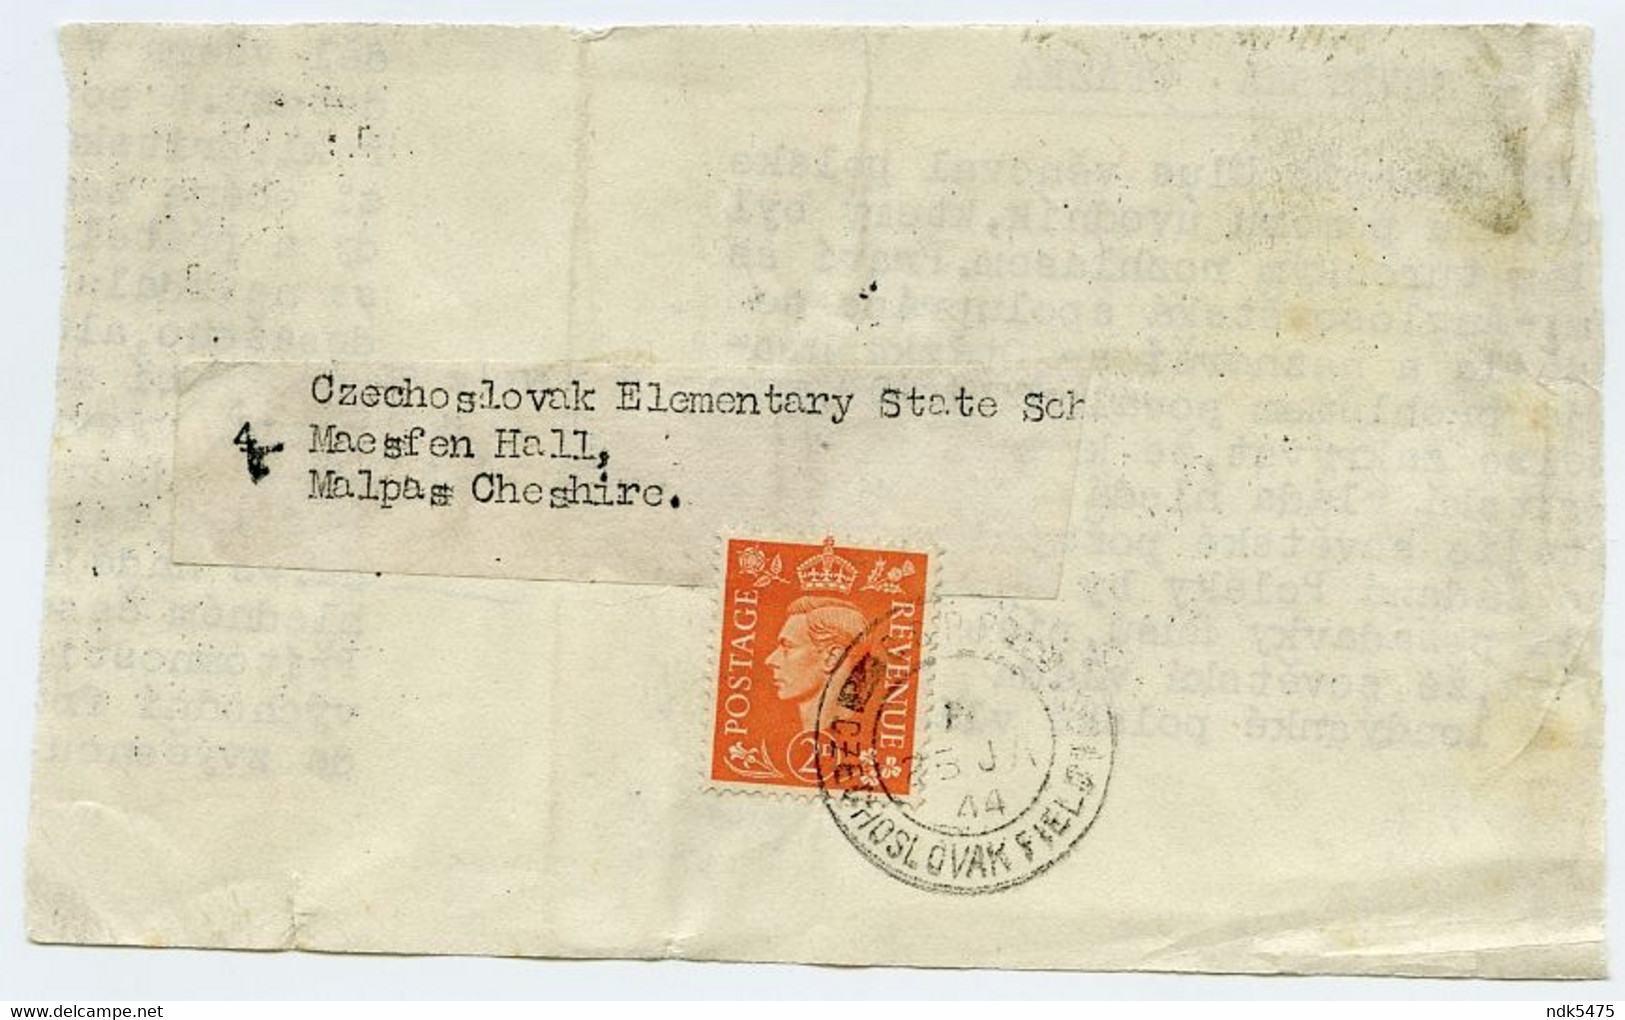 CZECHOSLOVAK FIELD POST : ELEMENTARY STATE SCHOOL, MAESFEN HALL, MALPAS, CHESHIRE, 1944 (PIECE) - Briefe U. Dokumente